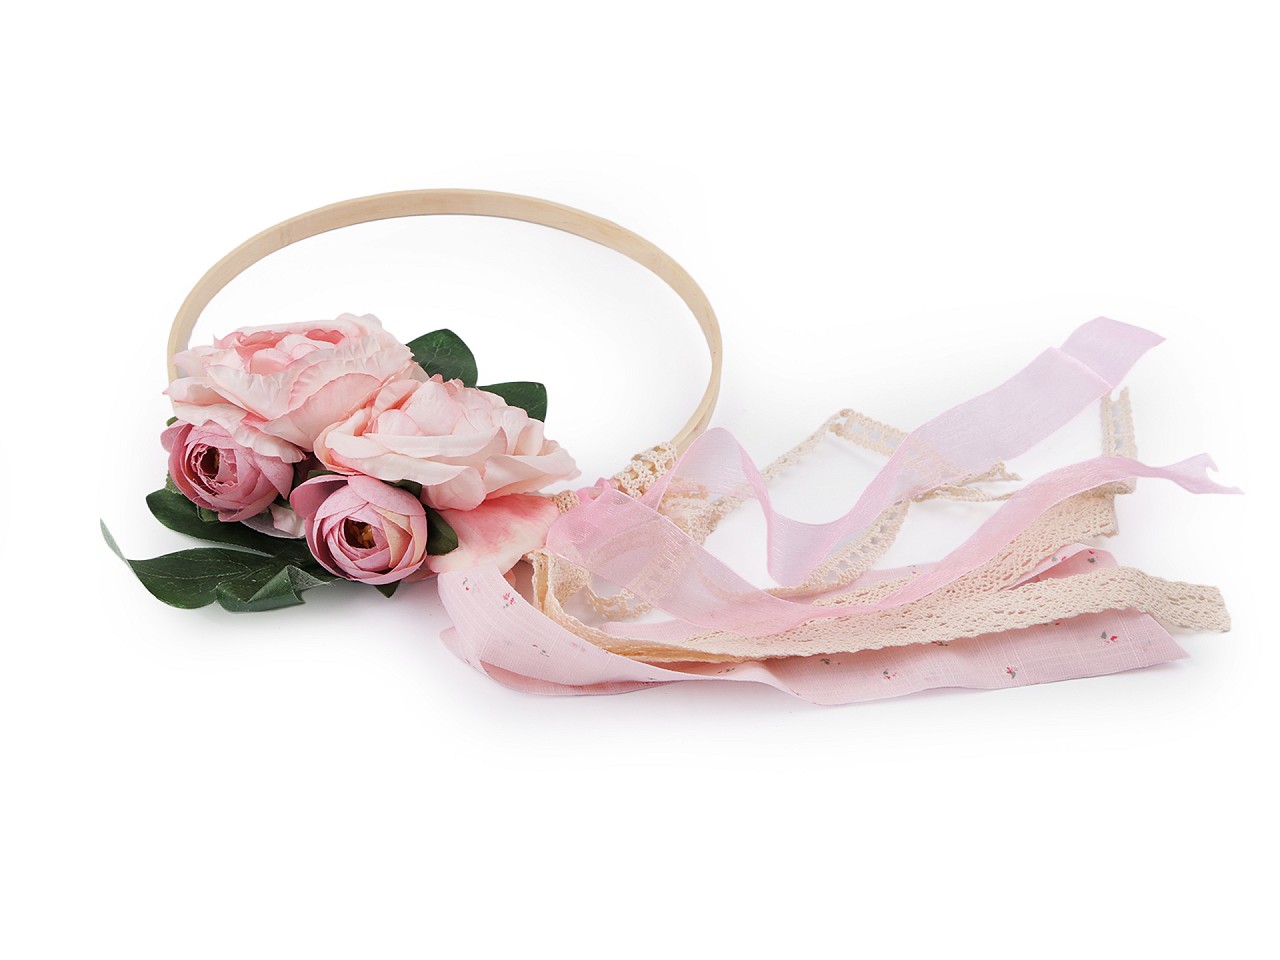 Textillux.sk - produkt Svadobná dekorácia kruh s kvetmi Ø19,5 cm - 2 ružová sv. čipka